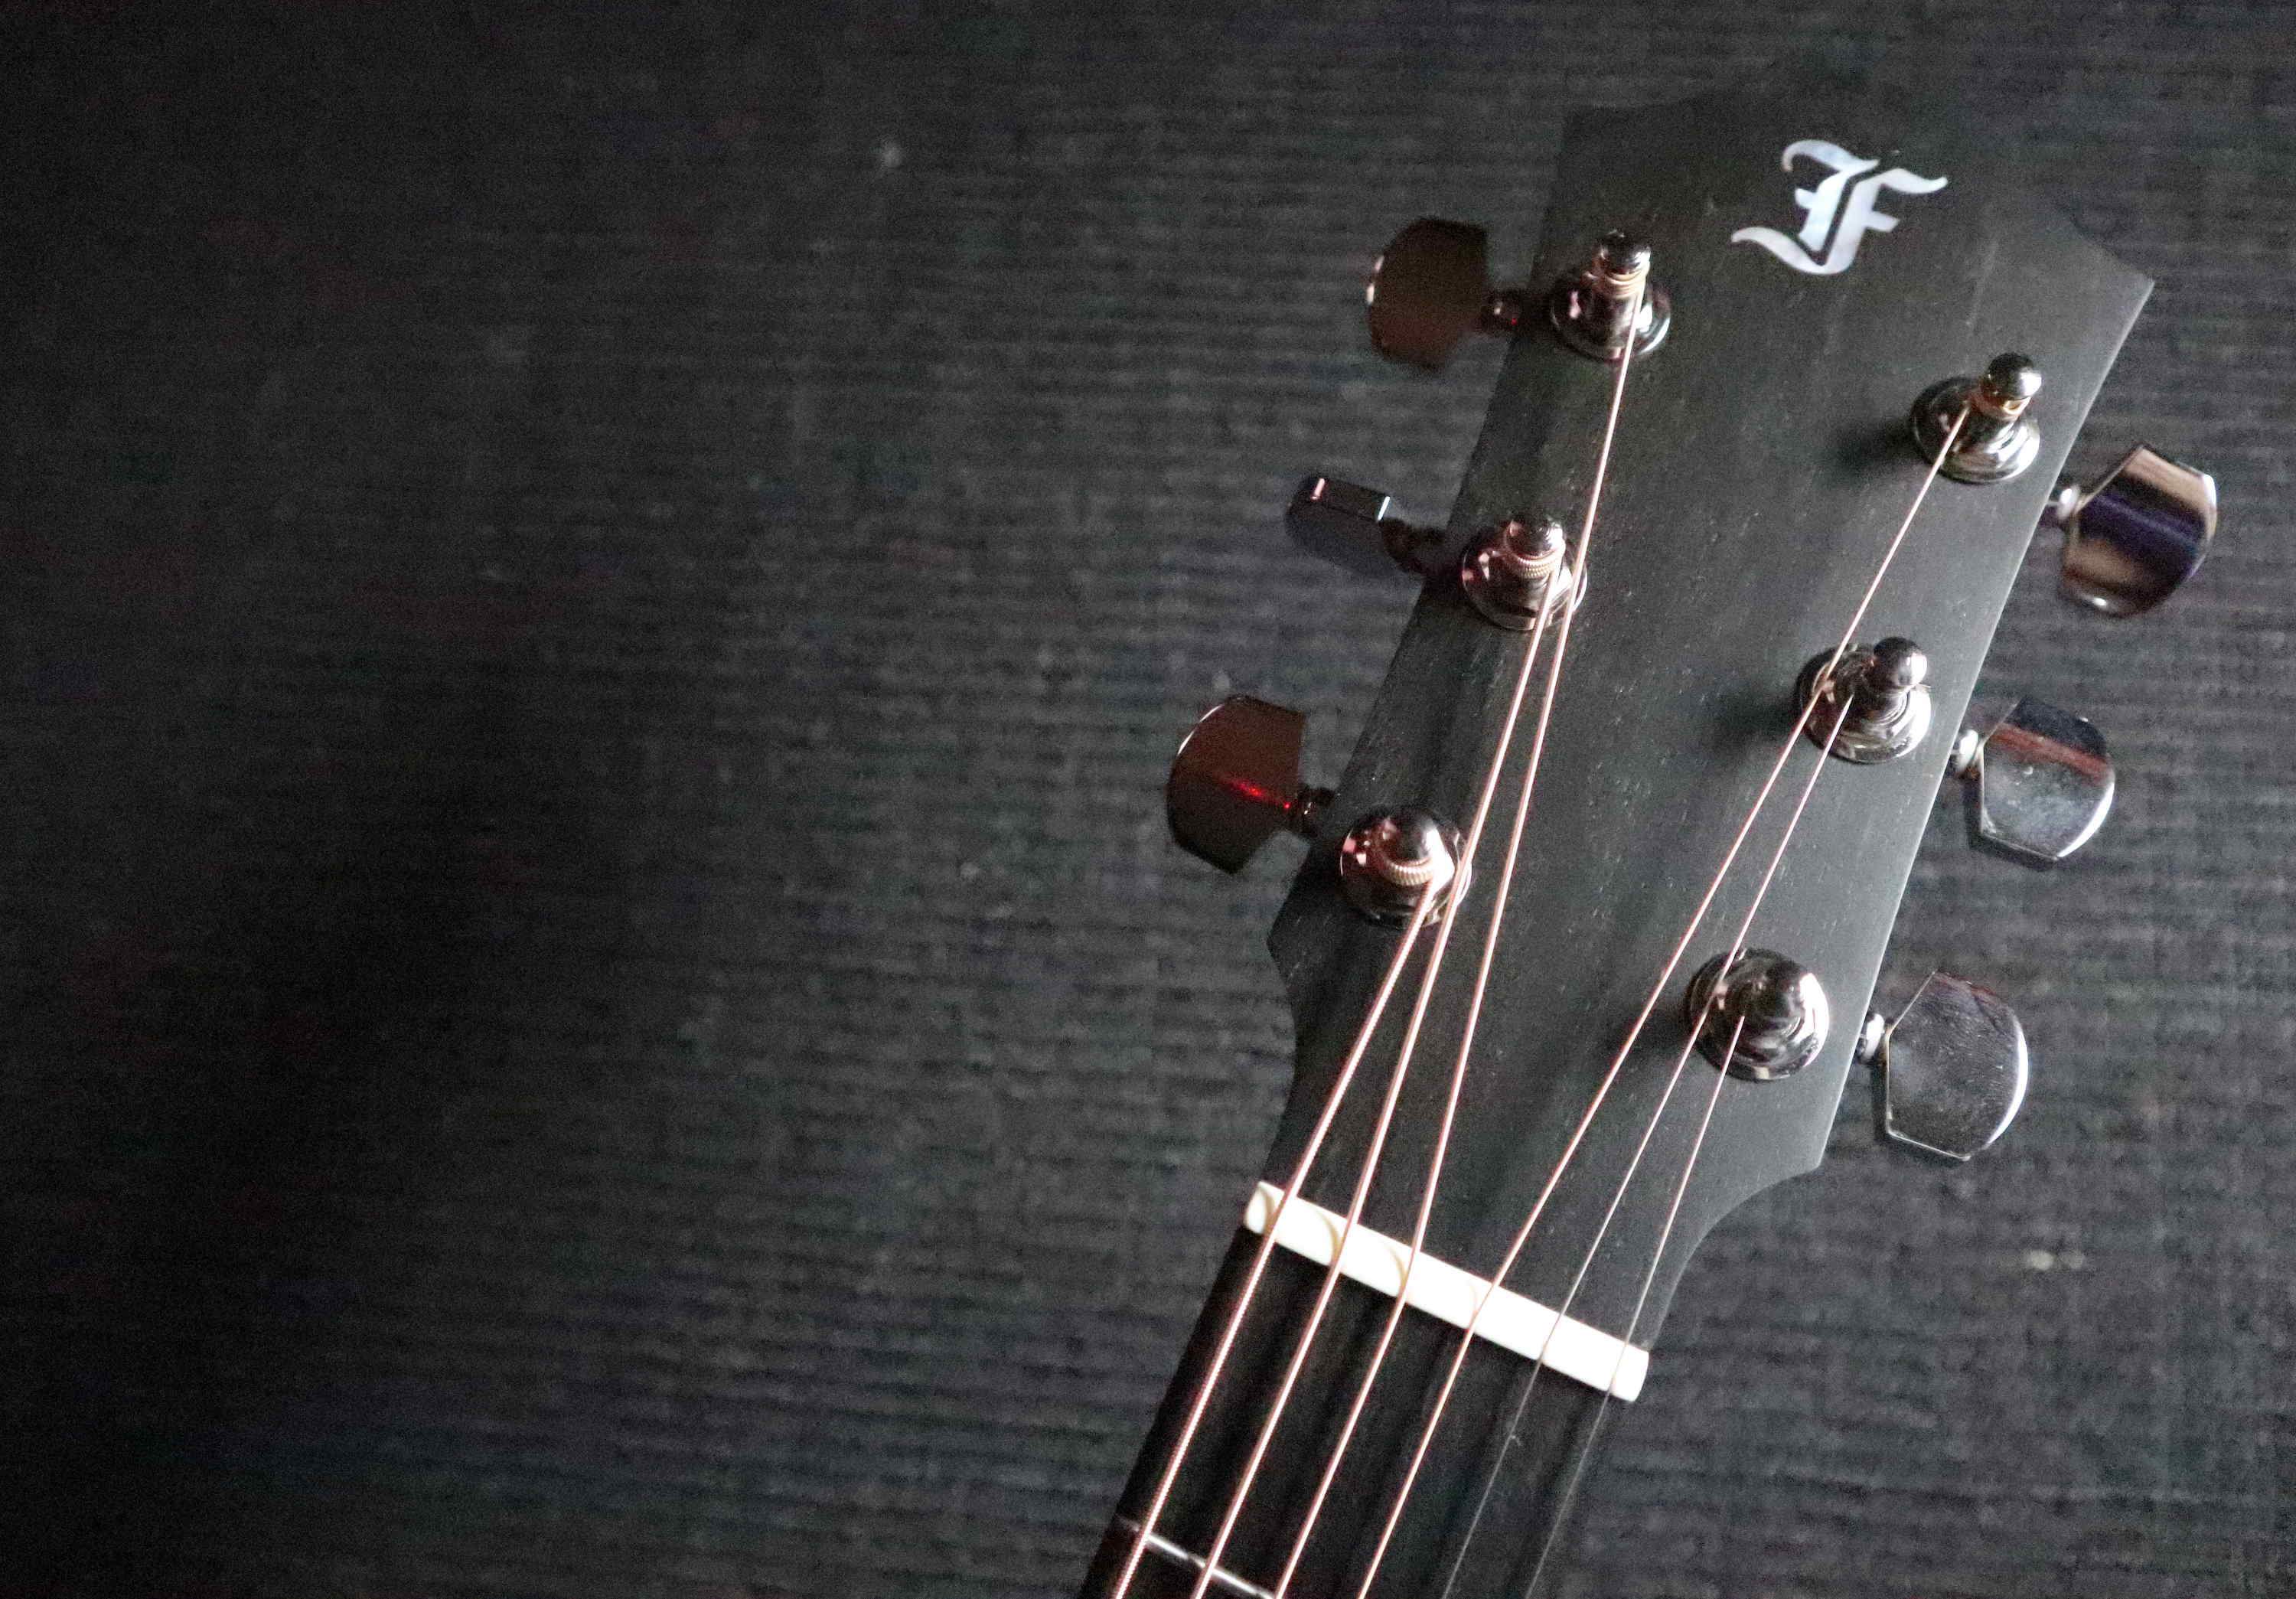 Furch Blue Gc CM Left Handed, Acoustic Guitar for sale at Richards Guitars.